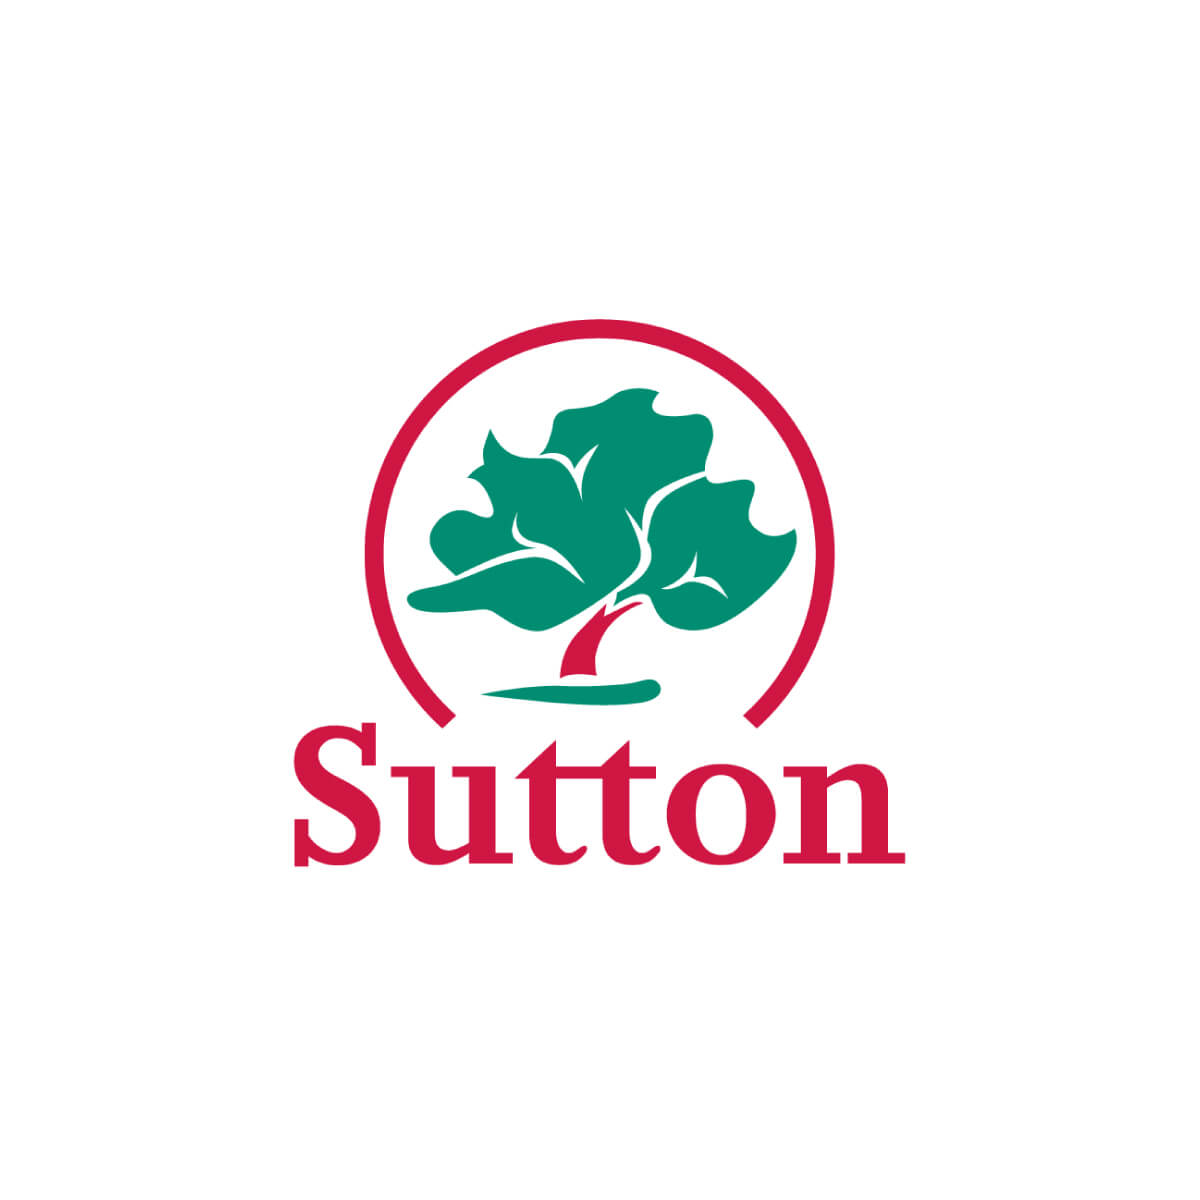 London Borough of Sutton Logo